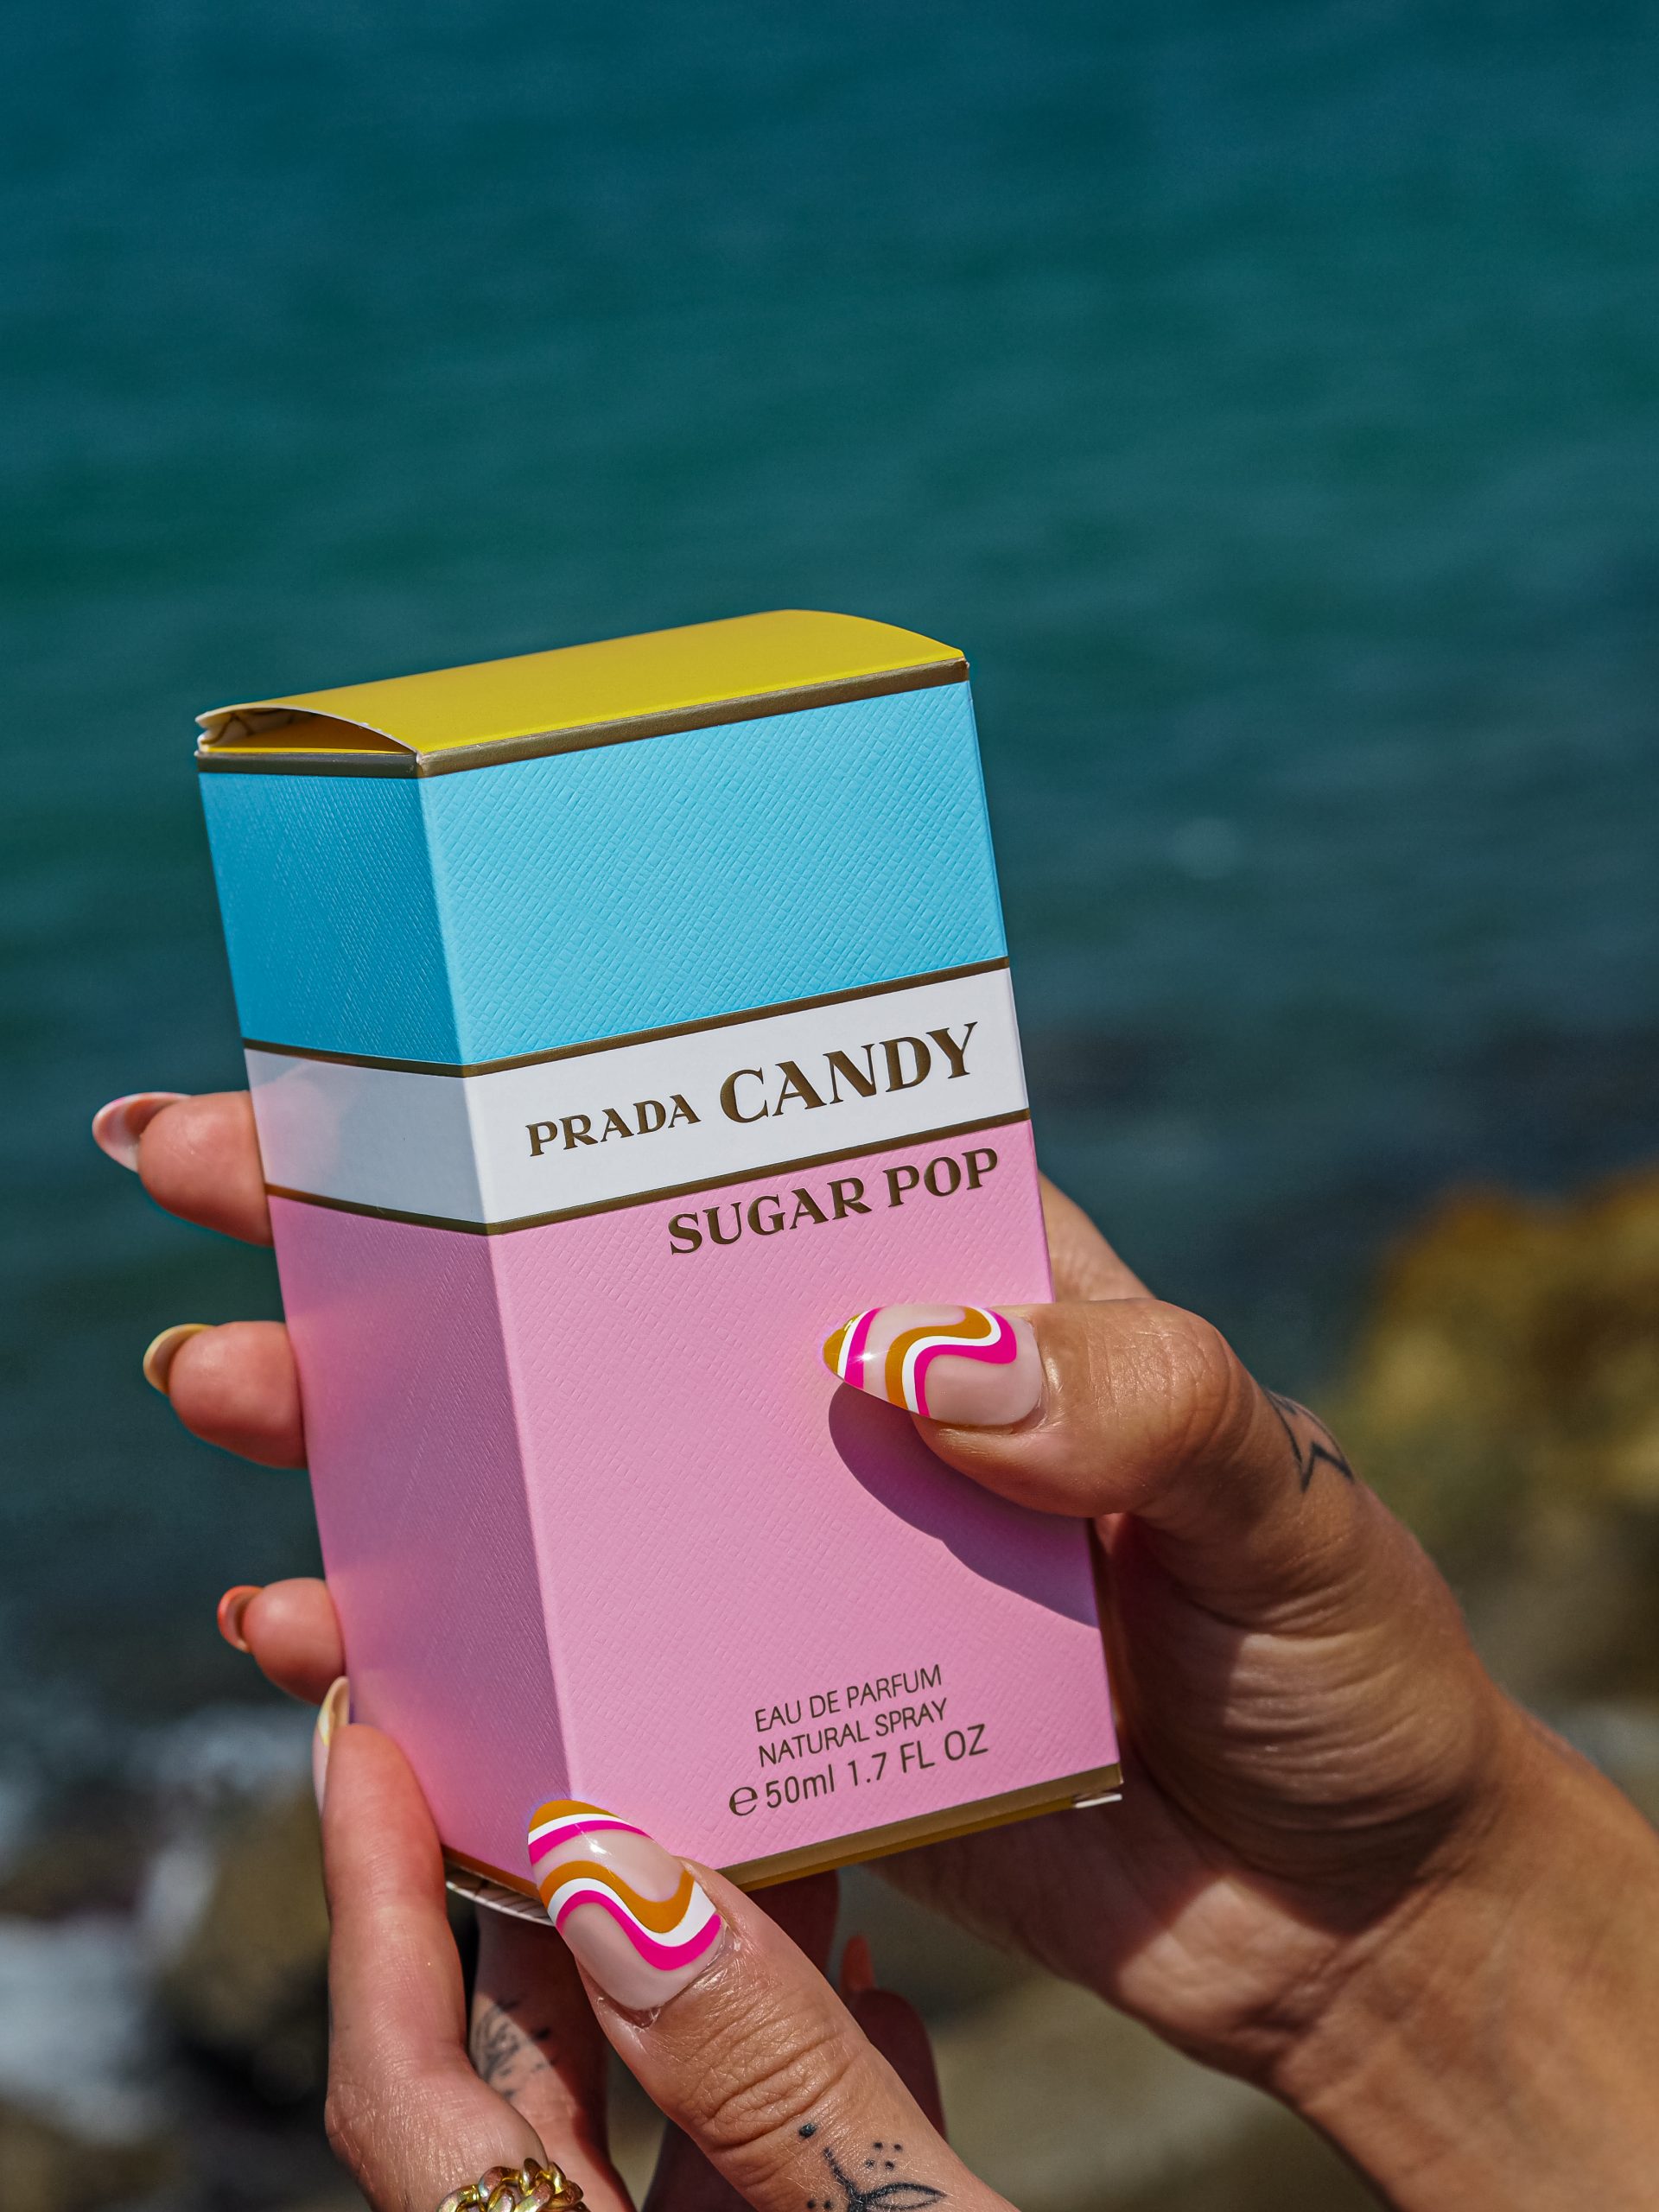 Prada Candy Sugar Pop - Perfume Direct - Laura Kate Lucas